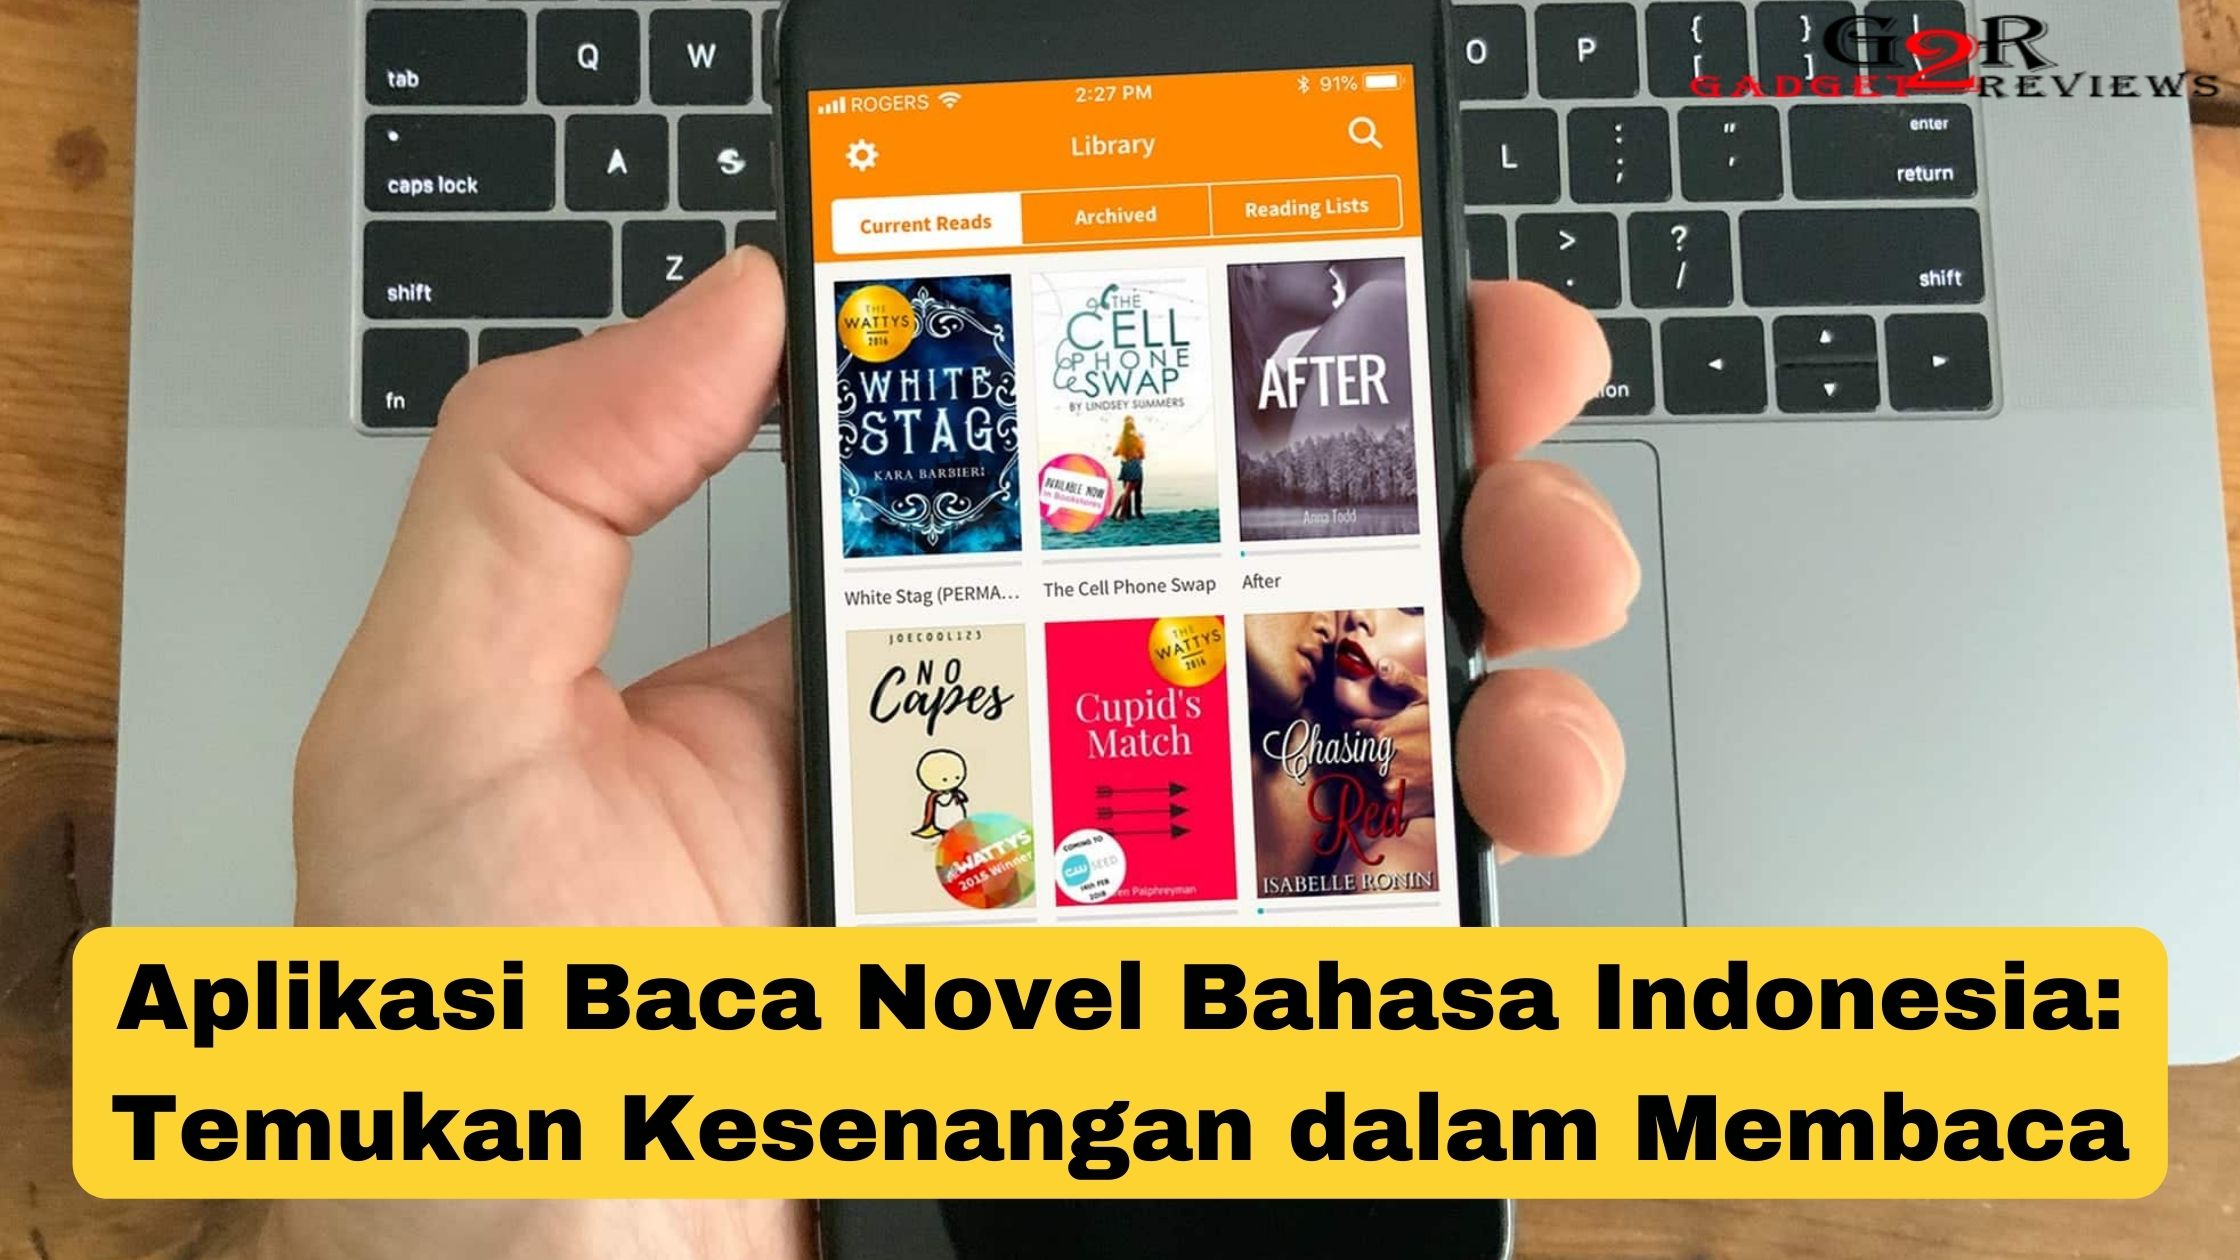 Baca Novel Bahasa Indonesia